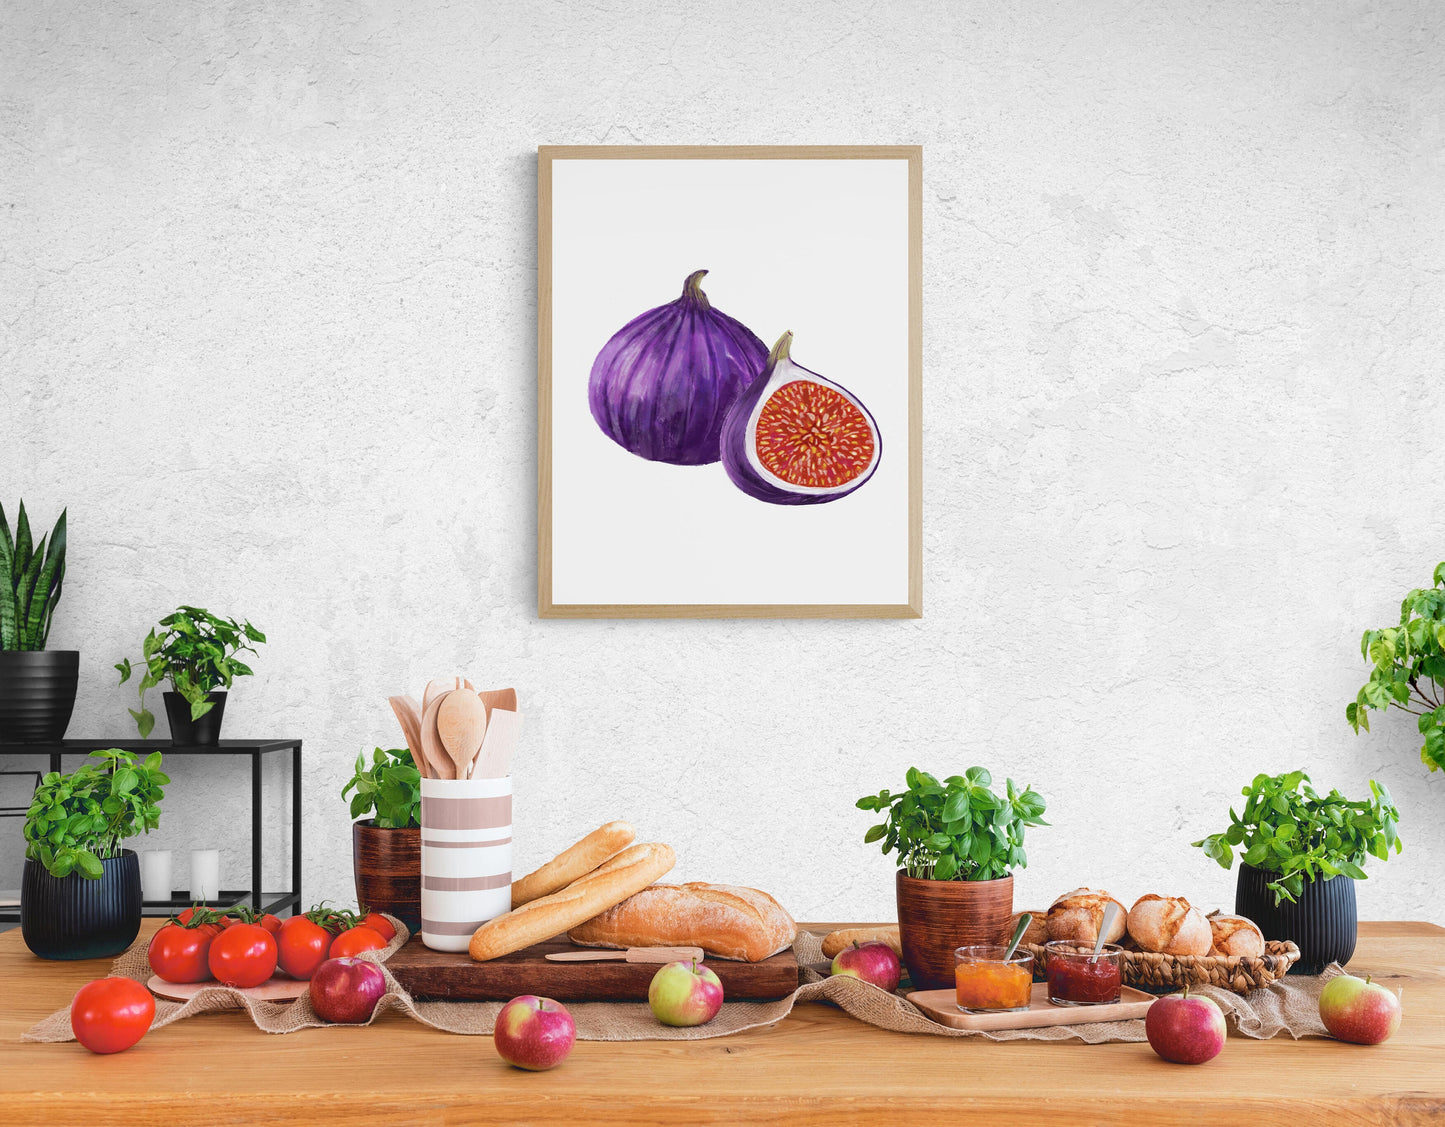 Purple Fig Art Print, Fruit of Heaven Art, Kitchen Wall Hanging, Dining Room Decor, Fig Painting, Fruit Illustration, Farmhouse Wall Decor